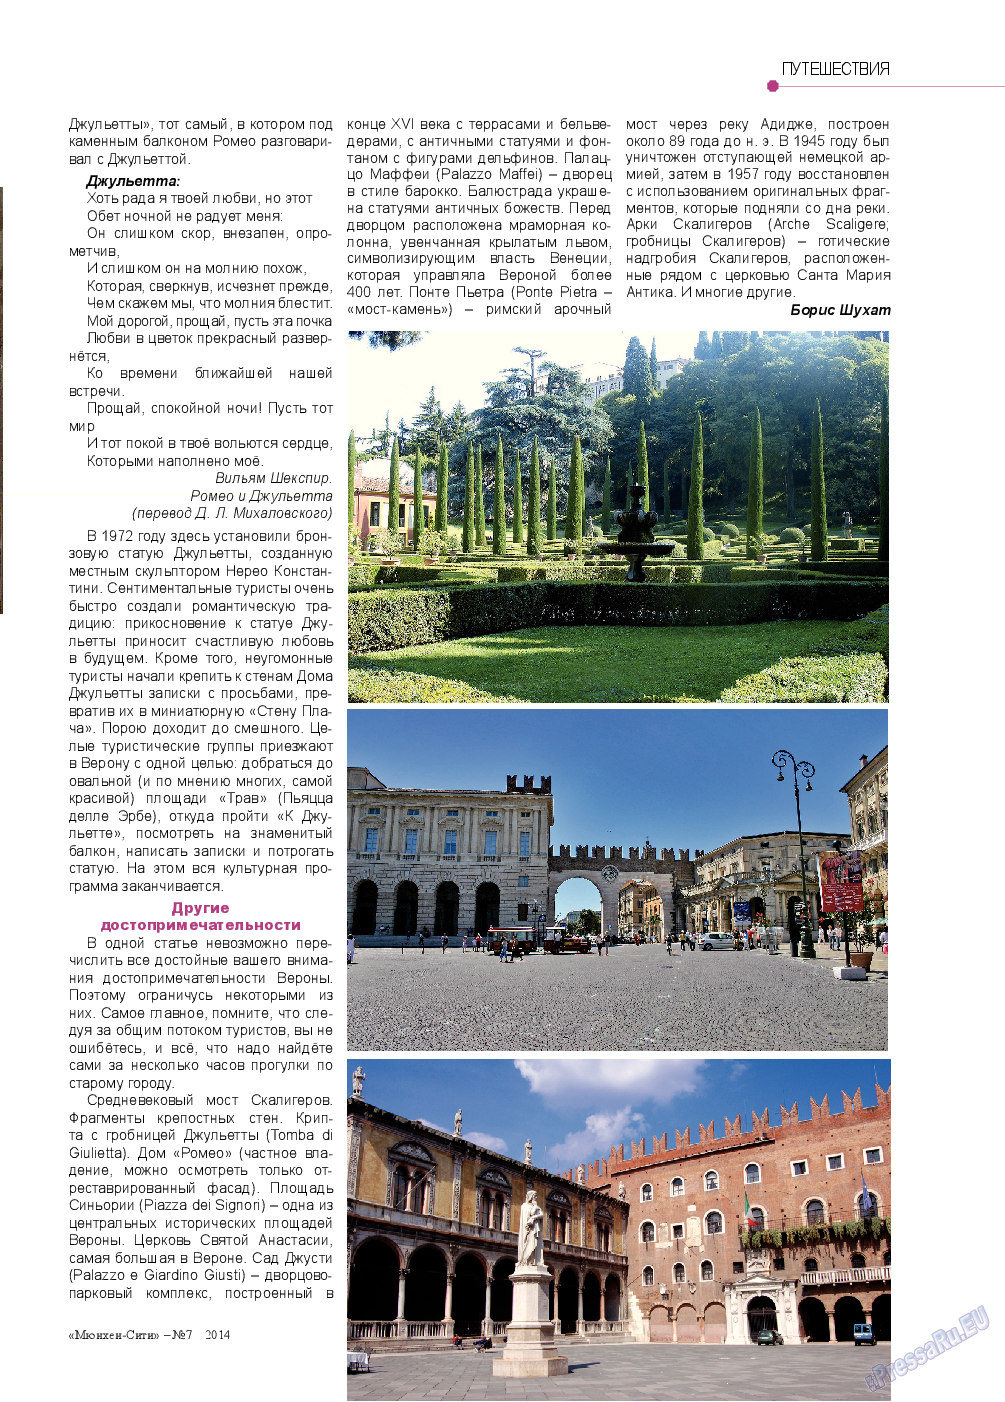 Мюнхен-сити, журнал. 2014 №7 стр.15